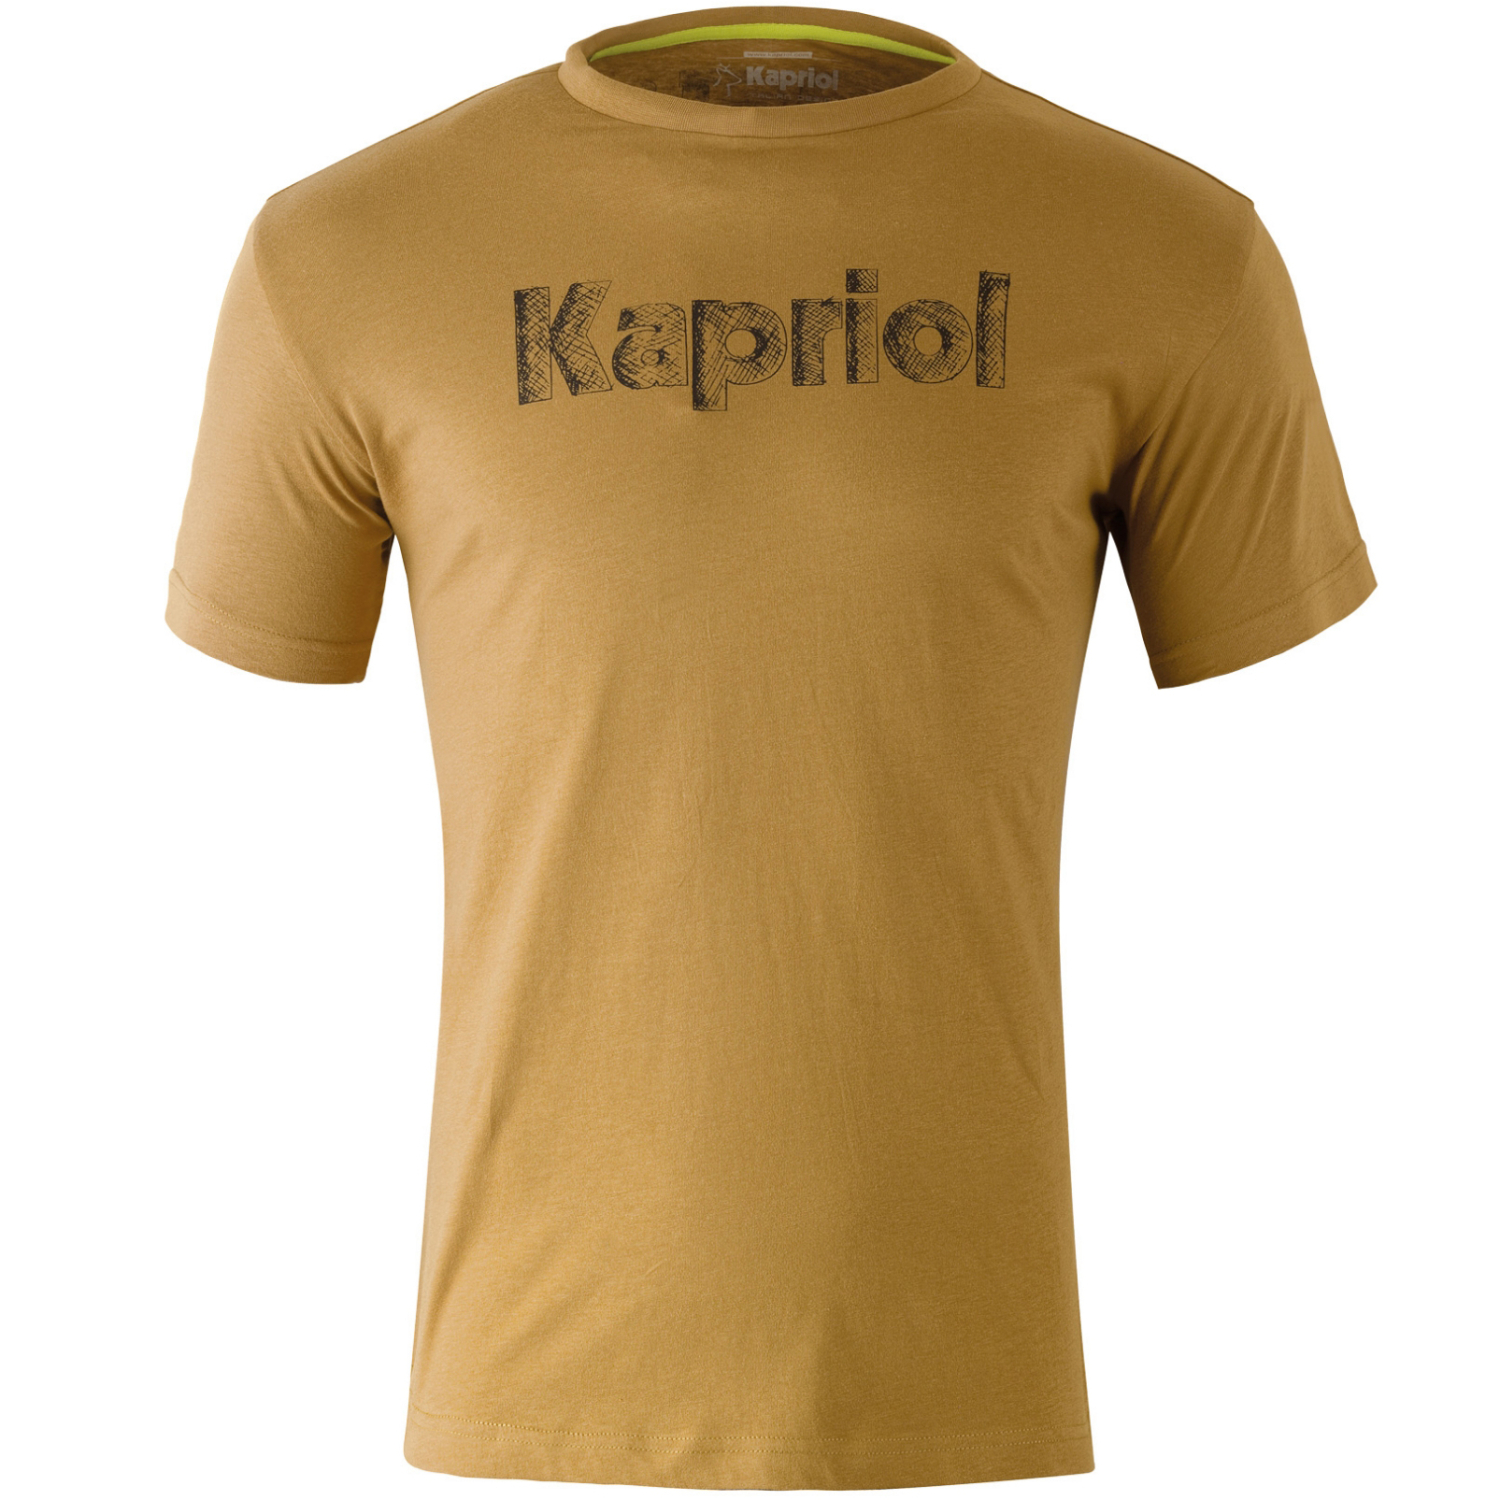 detail T-Shirt KAPRIOL Enjoy